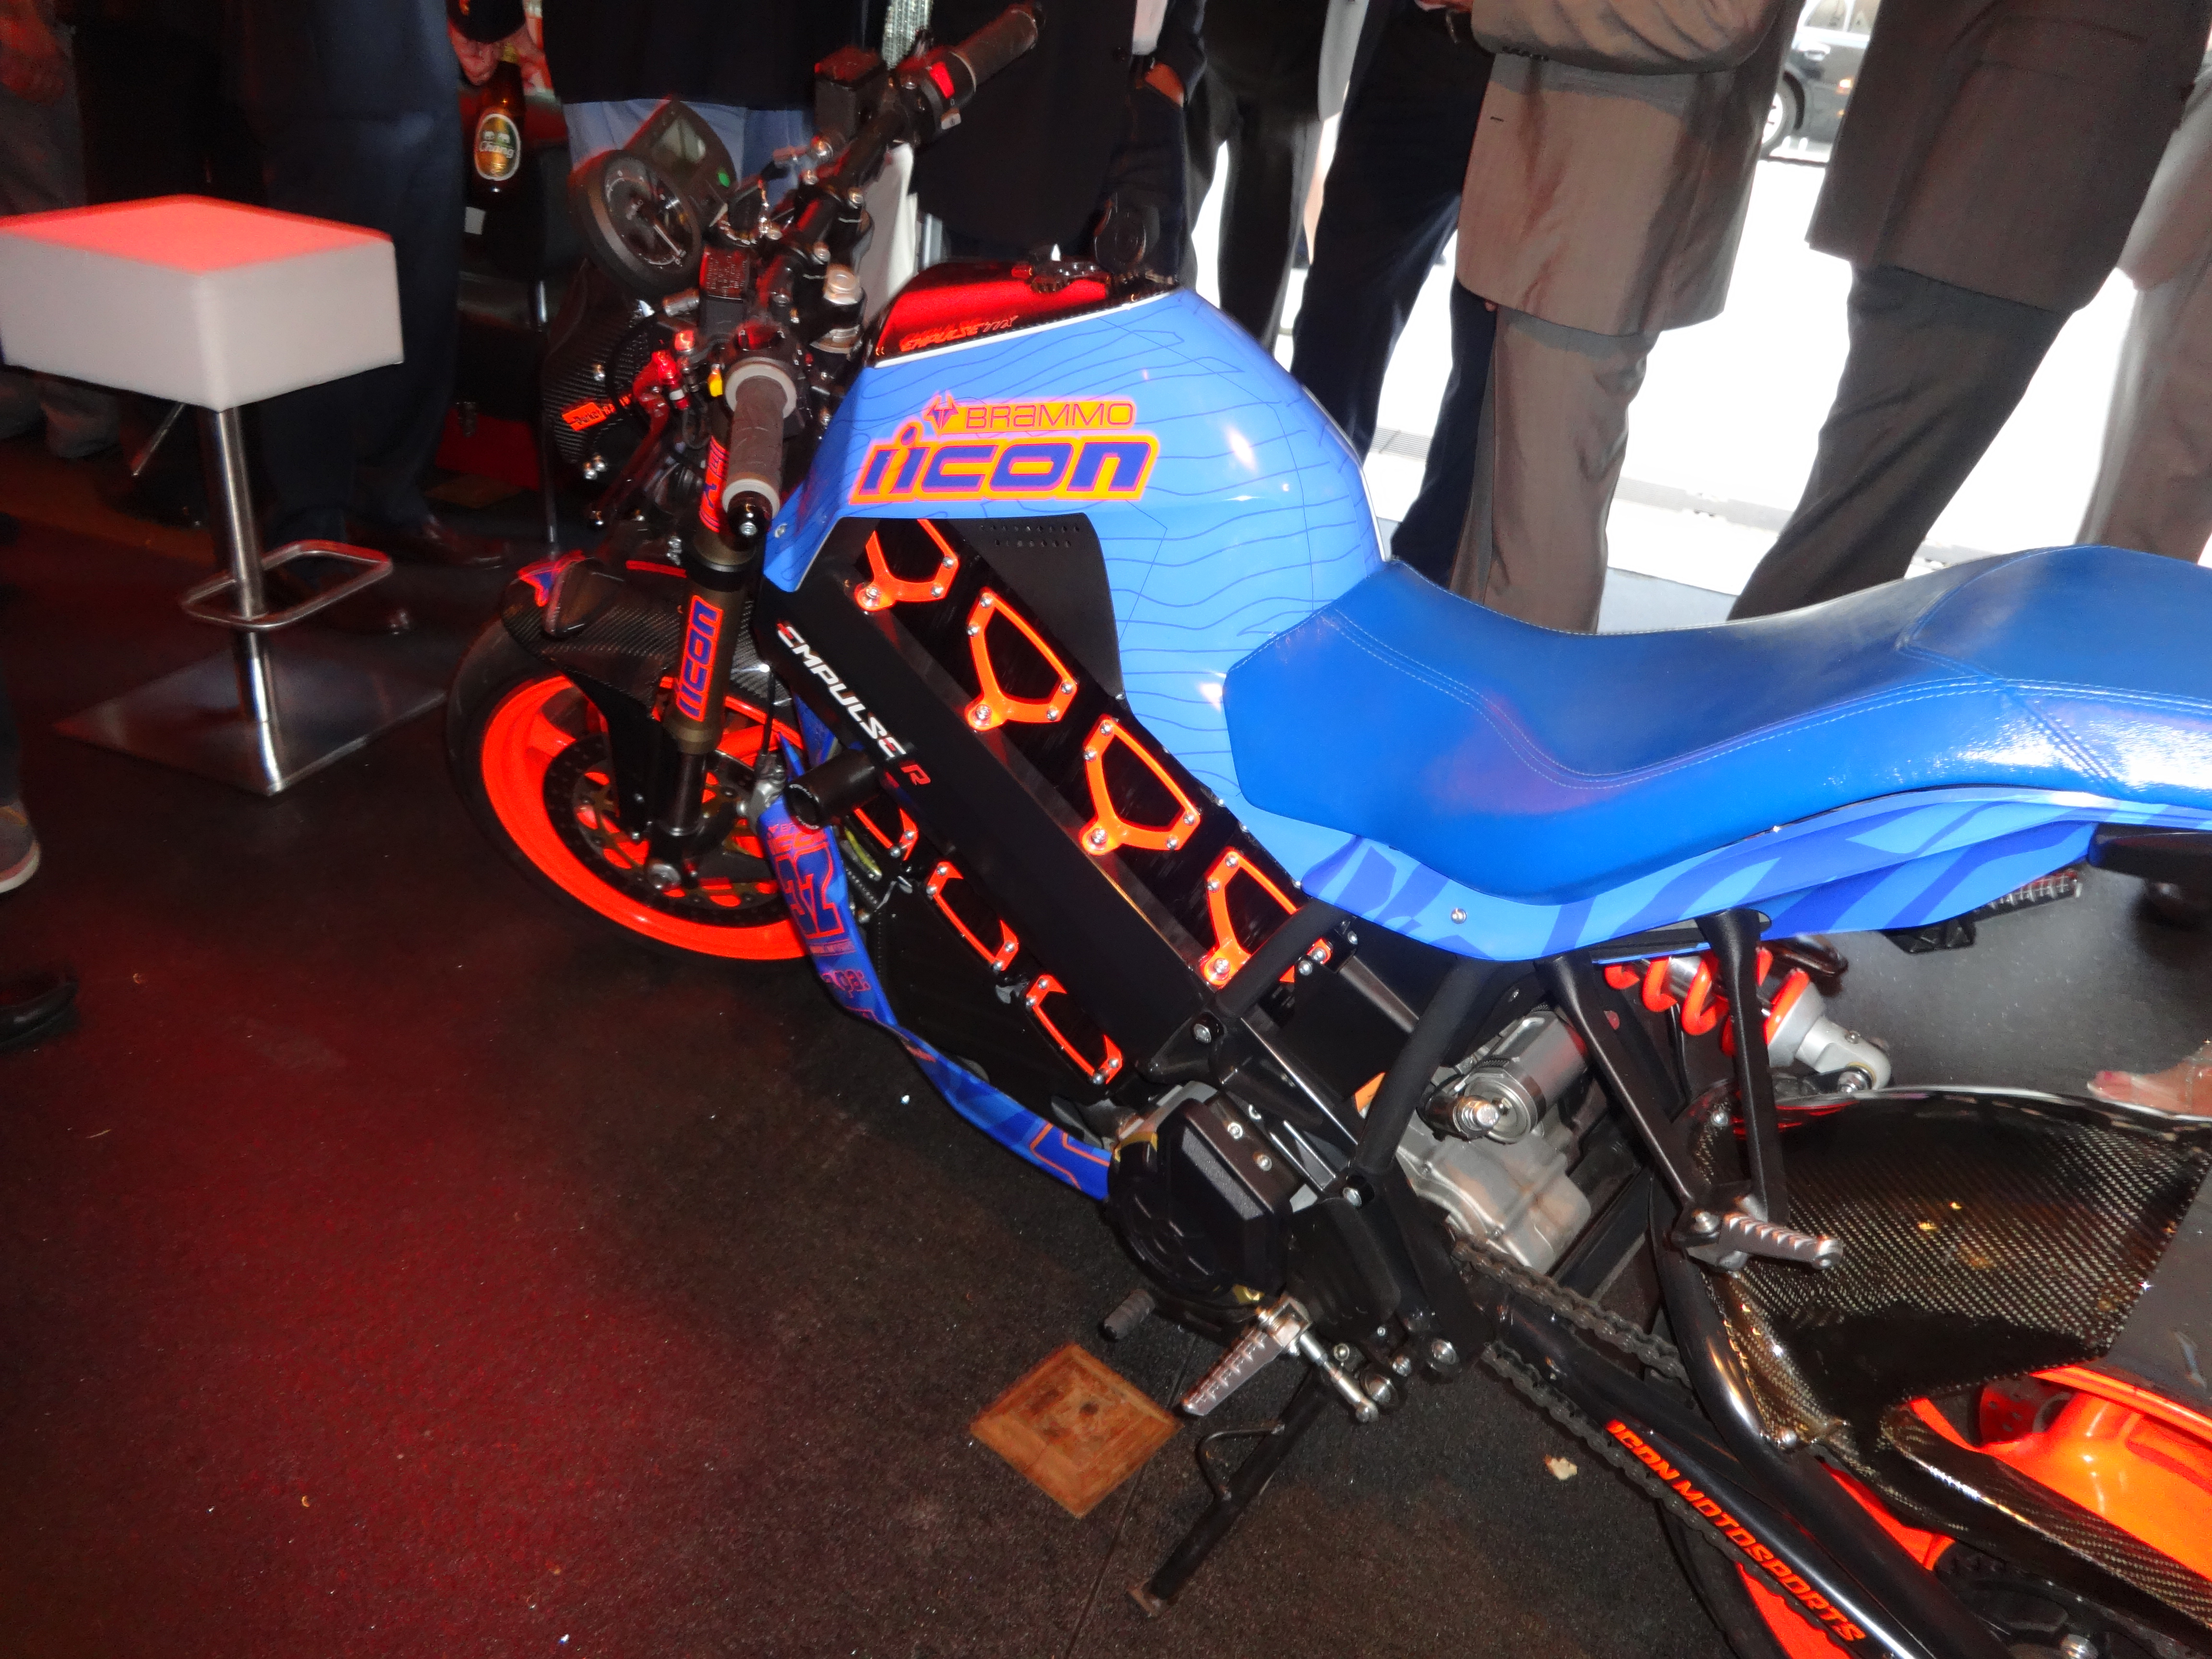 Wilzig blue electric bike